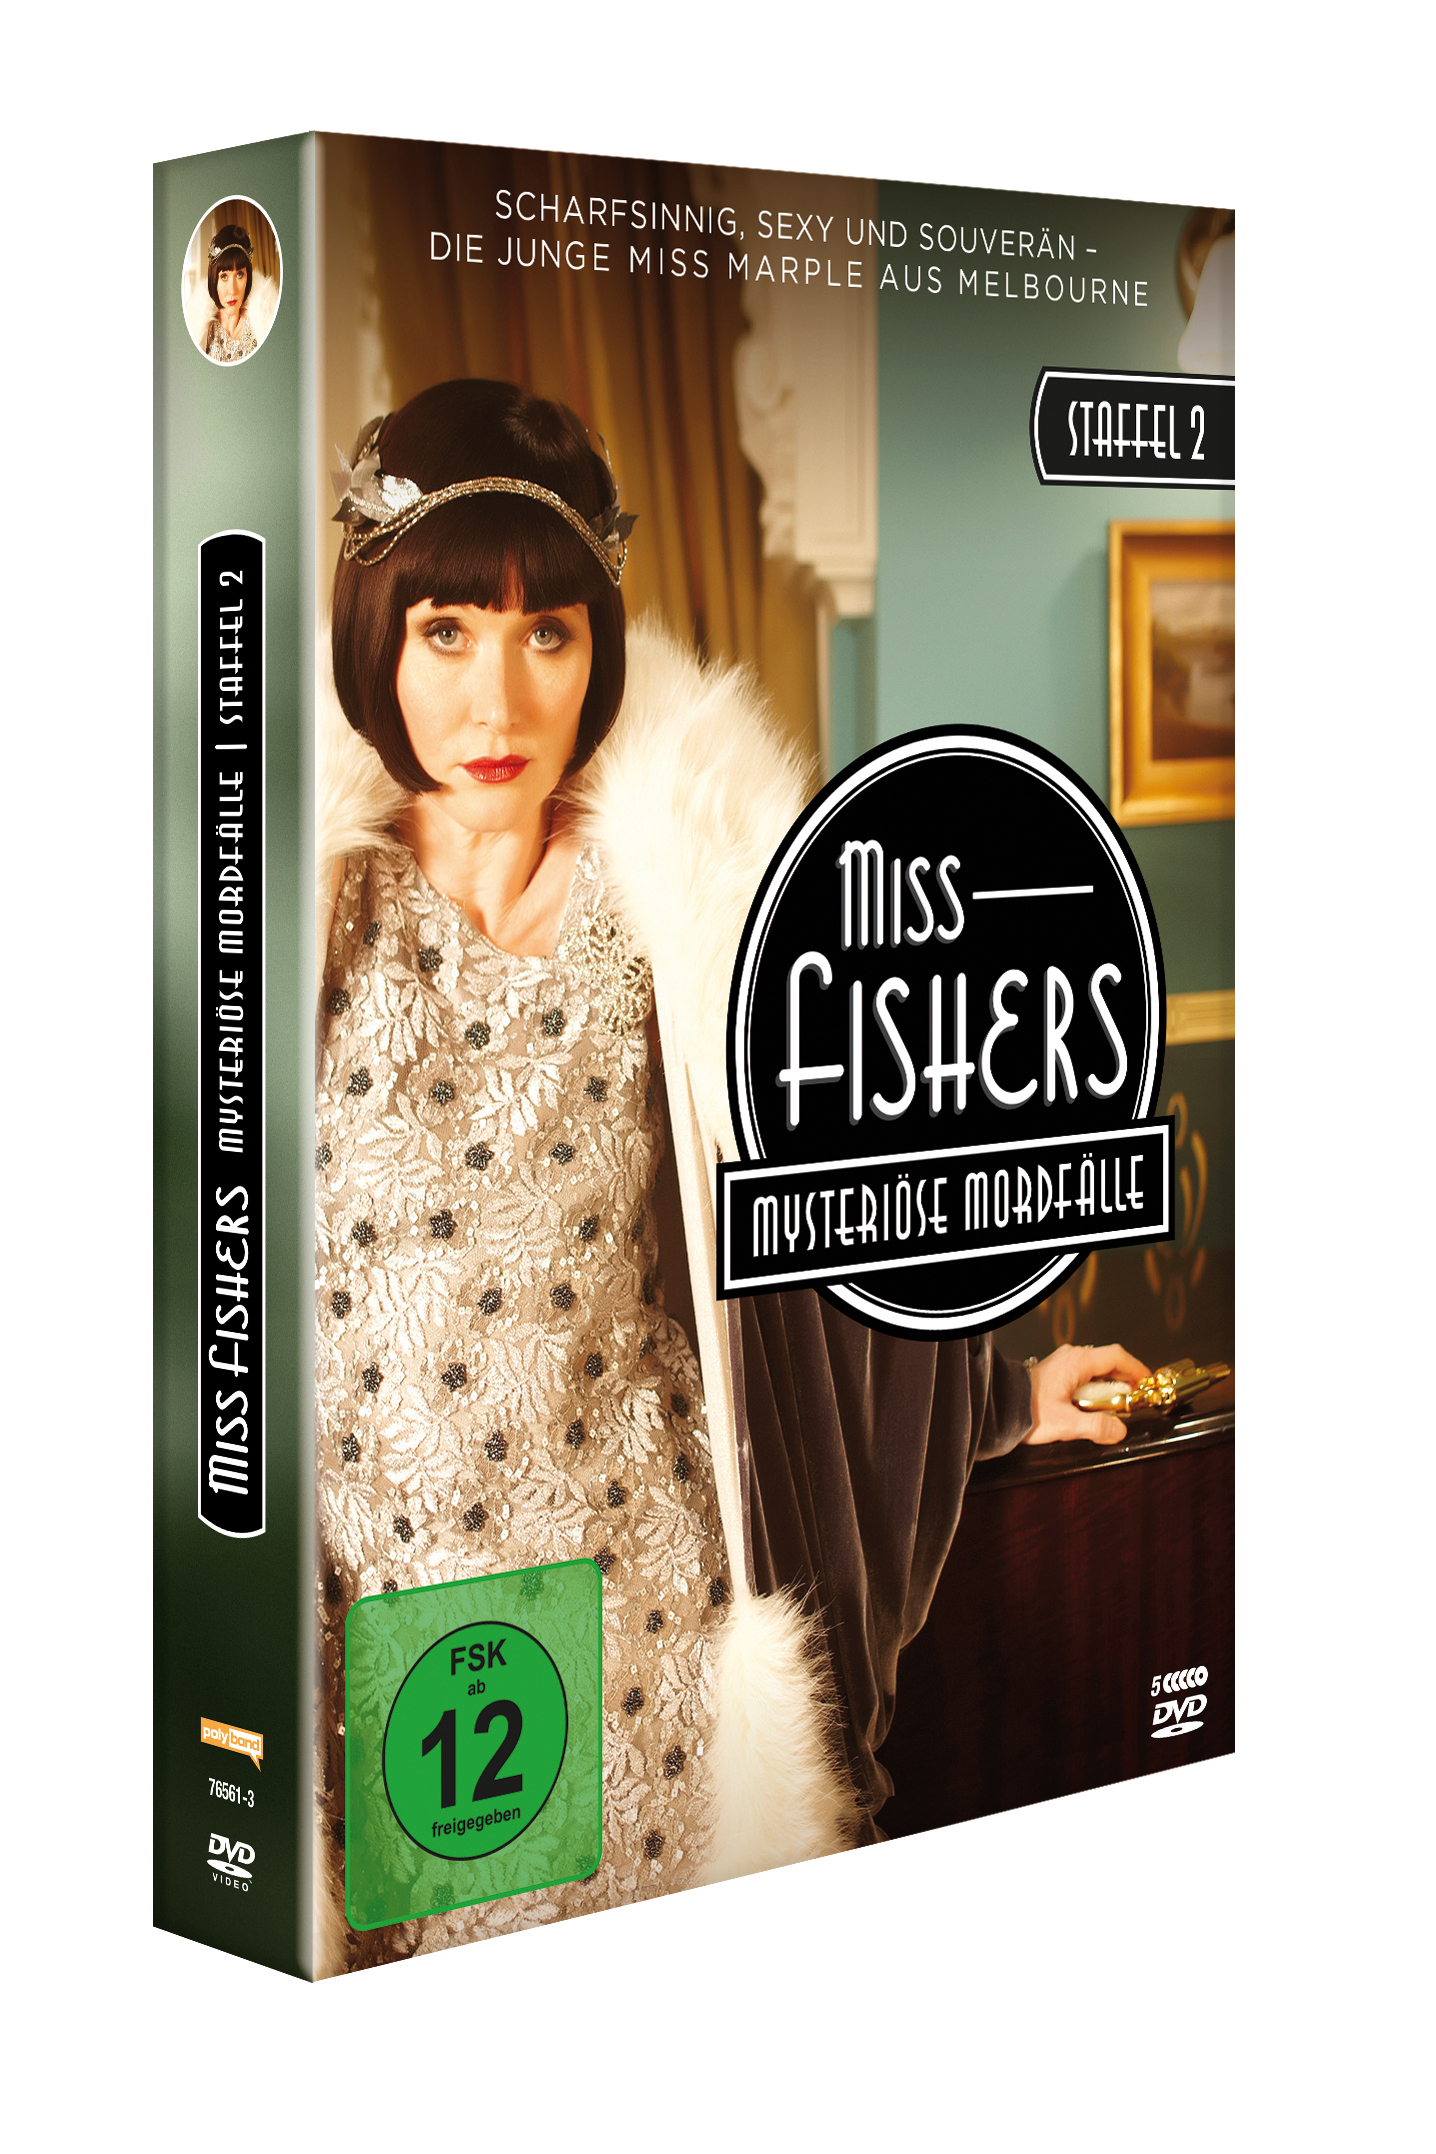 Staffel 2 Fishers DVD Miss Mordfälle - mysteriöse